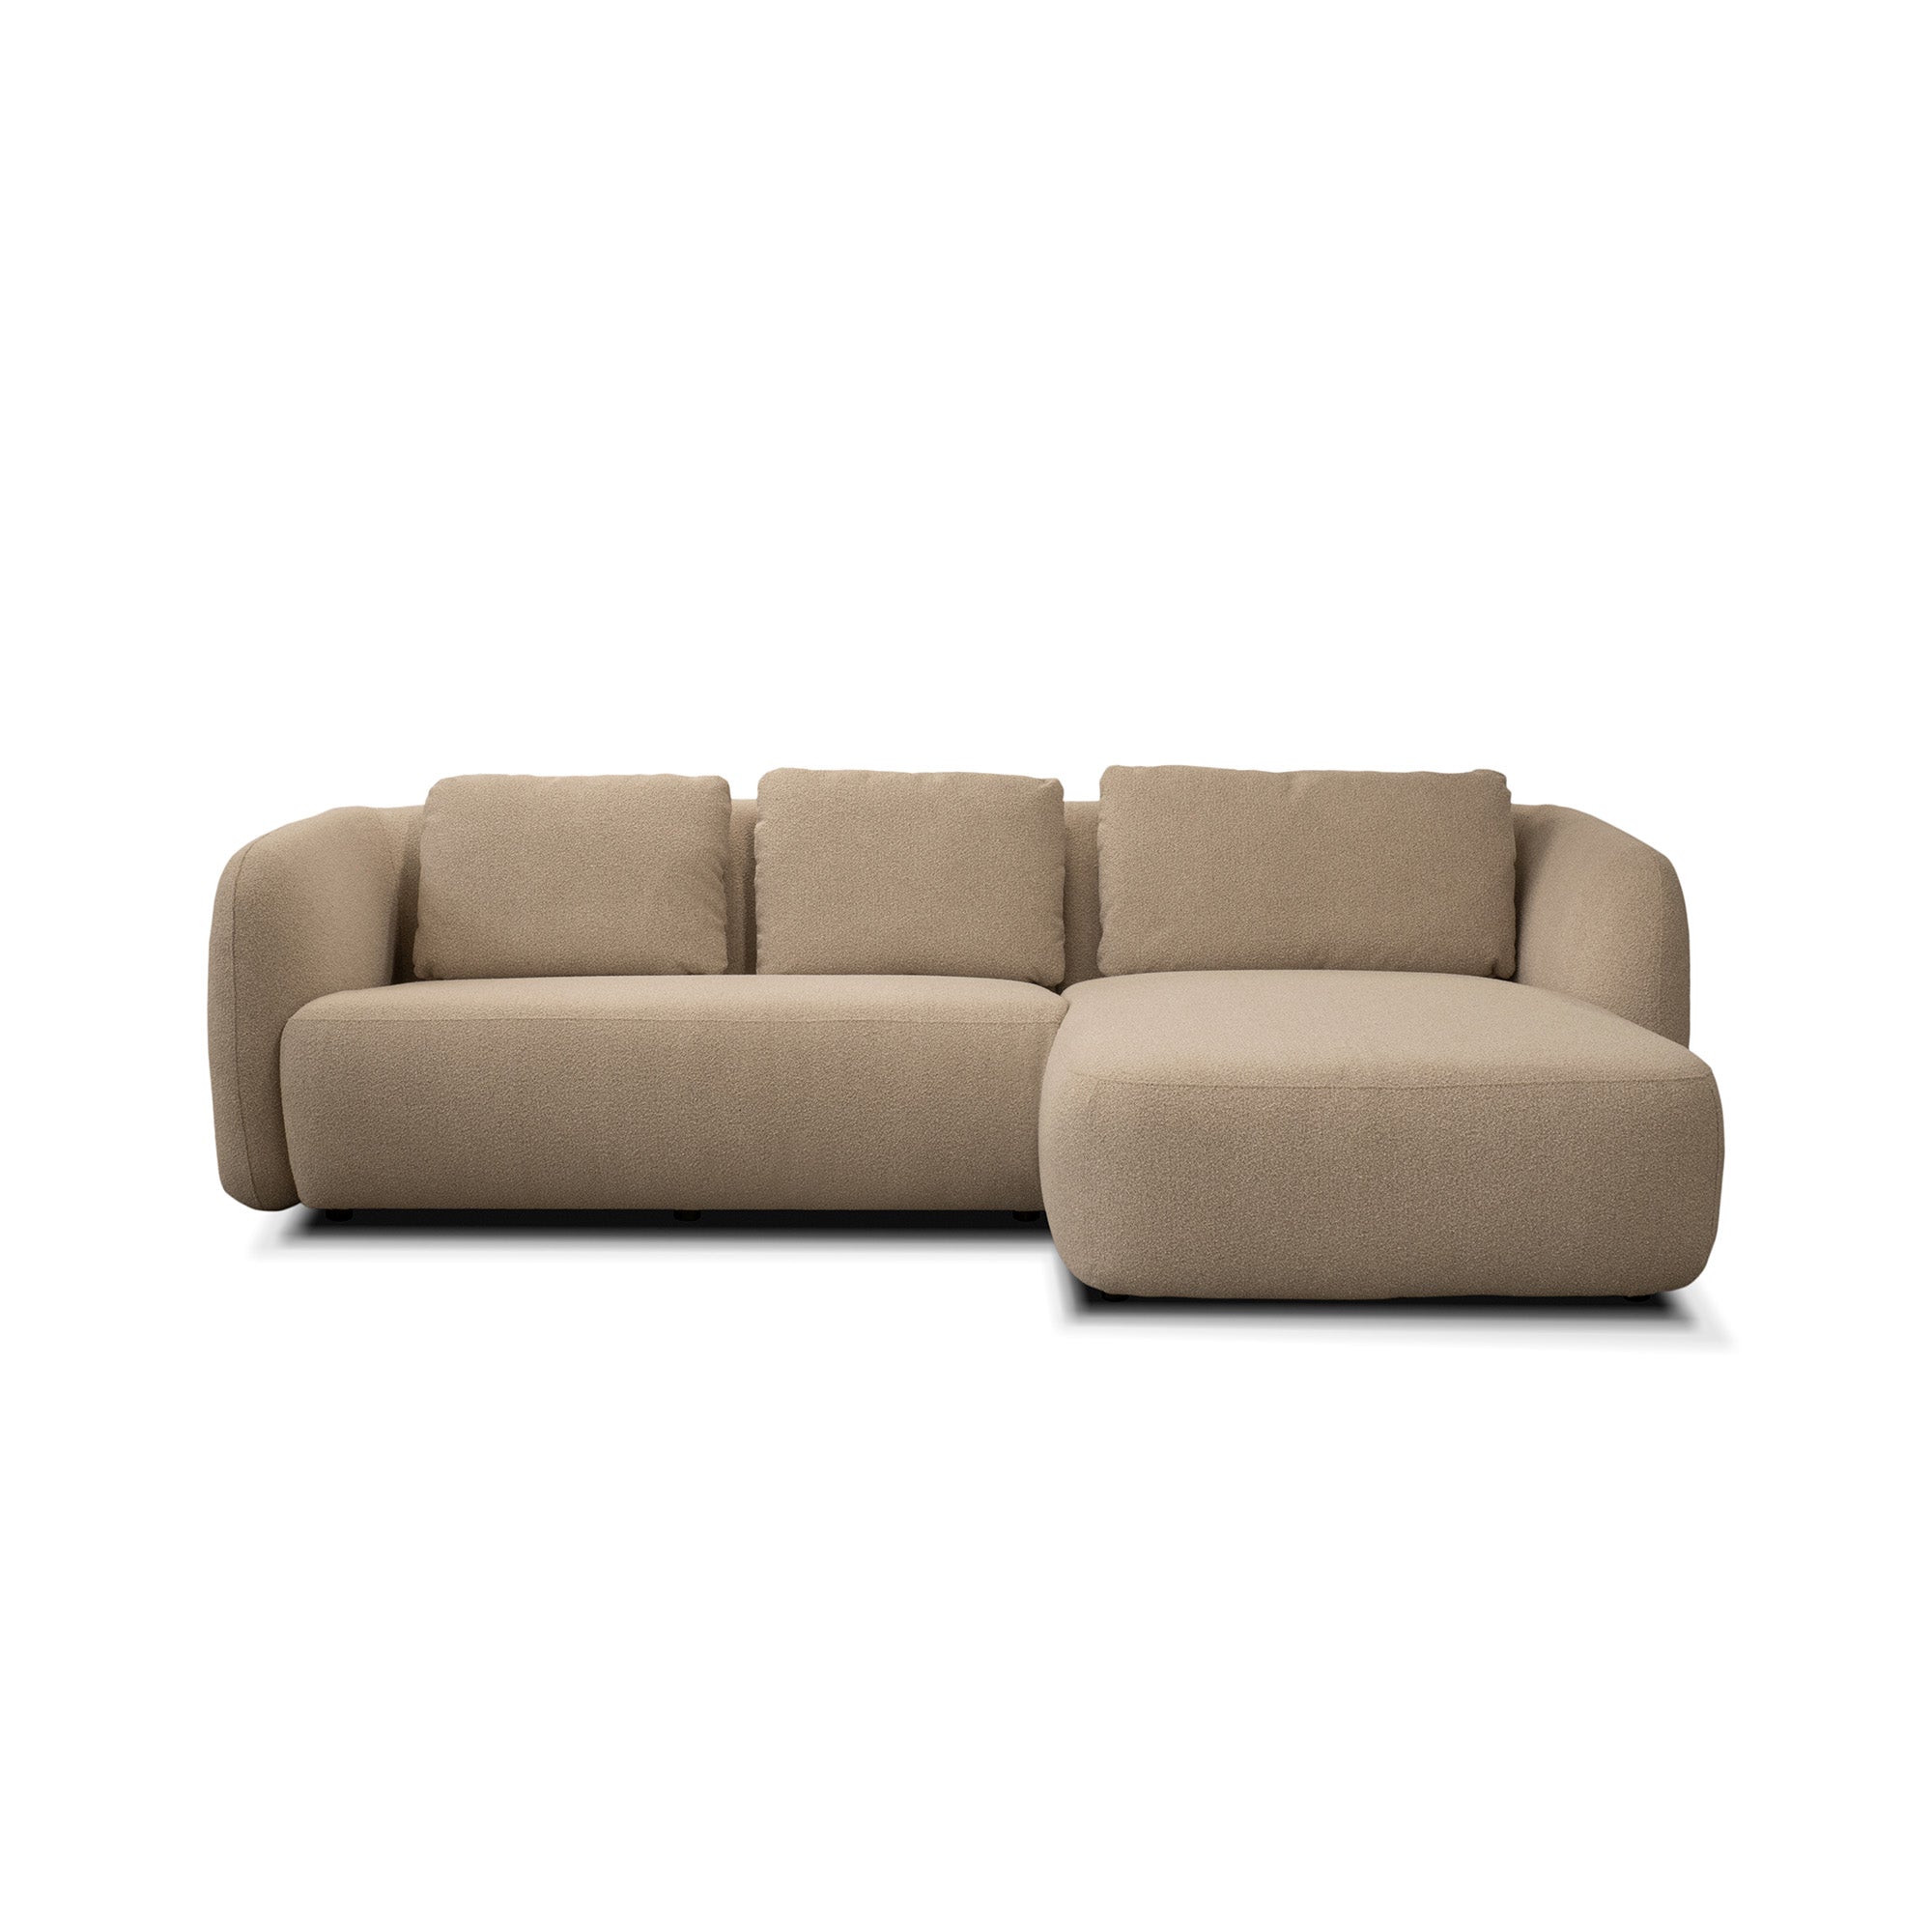 Trapani chaiselong sofa højrevendt